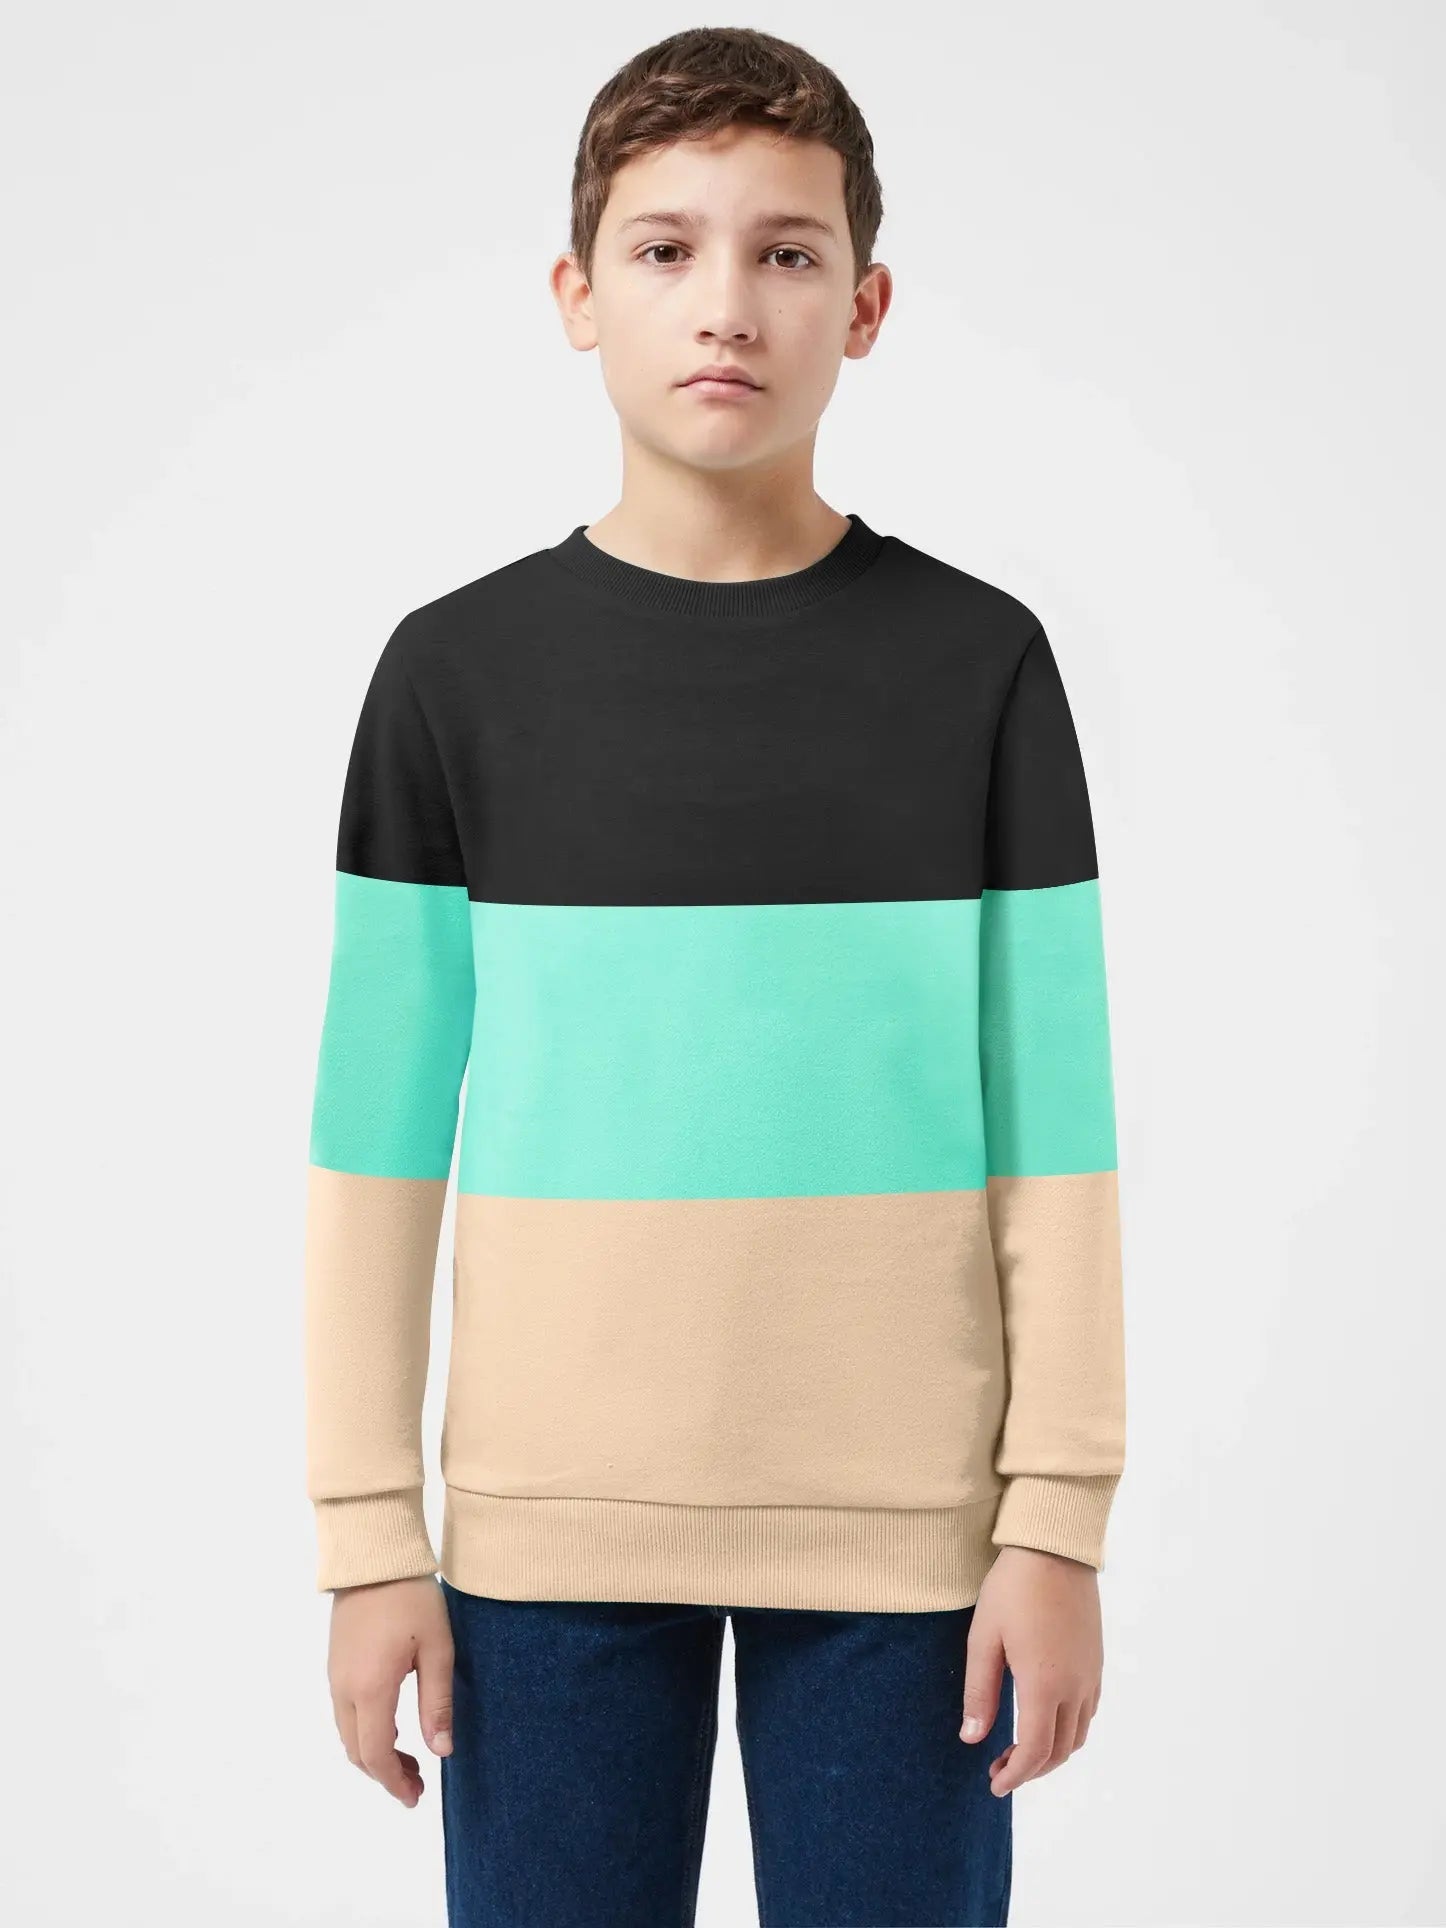 Next Fleece Panel Style Sweatshirt For Kids-Black with Cyan Green & Skin-SP150